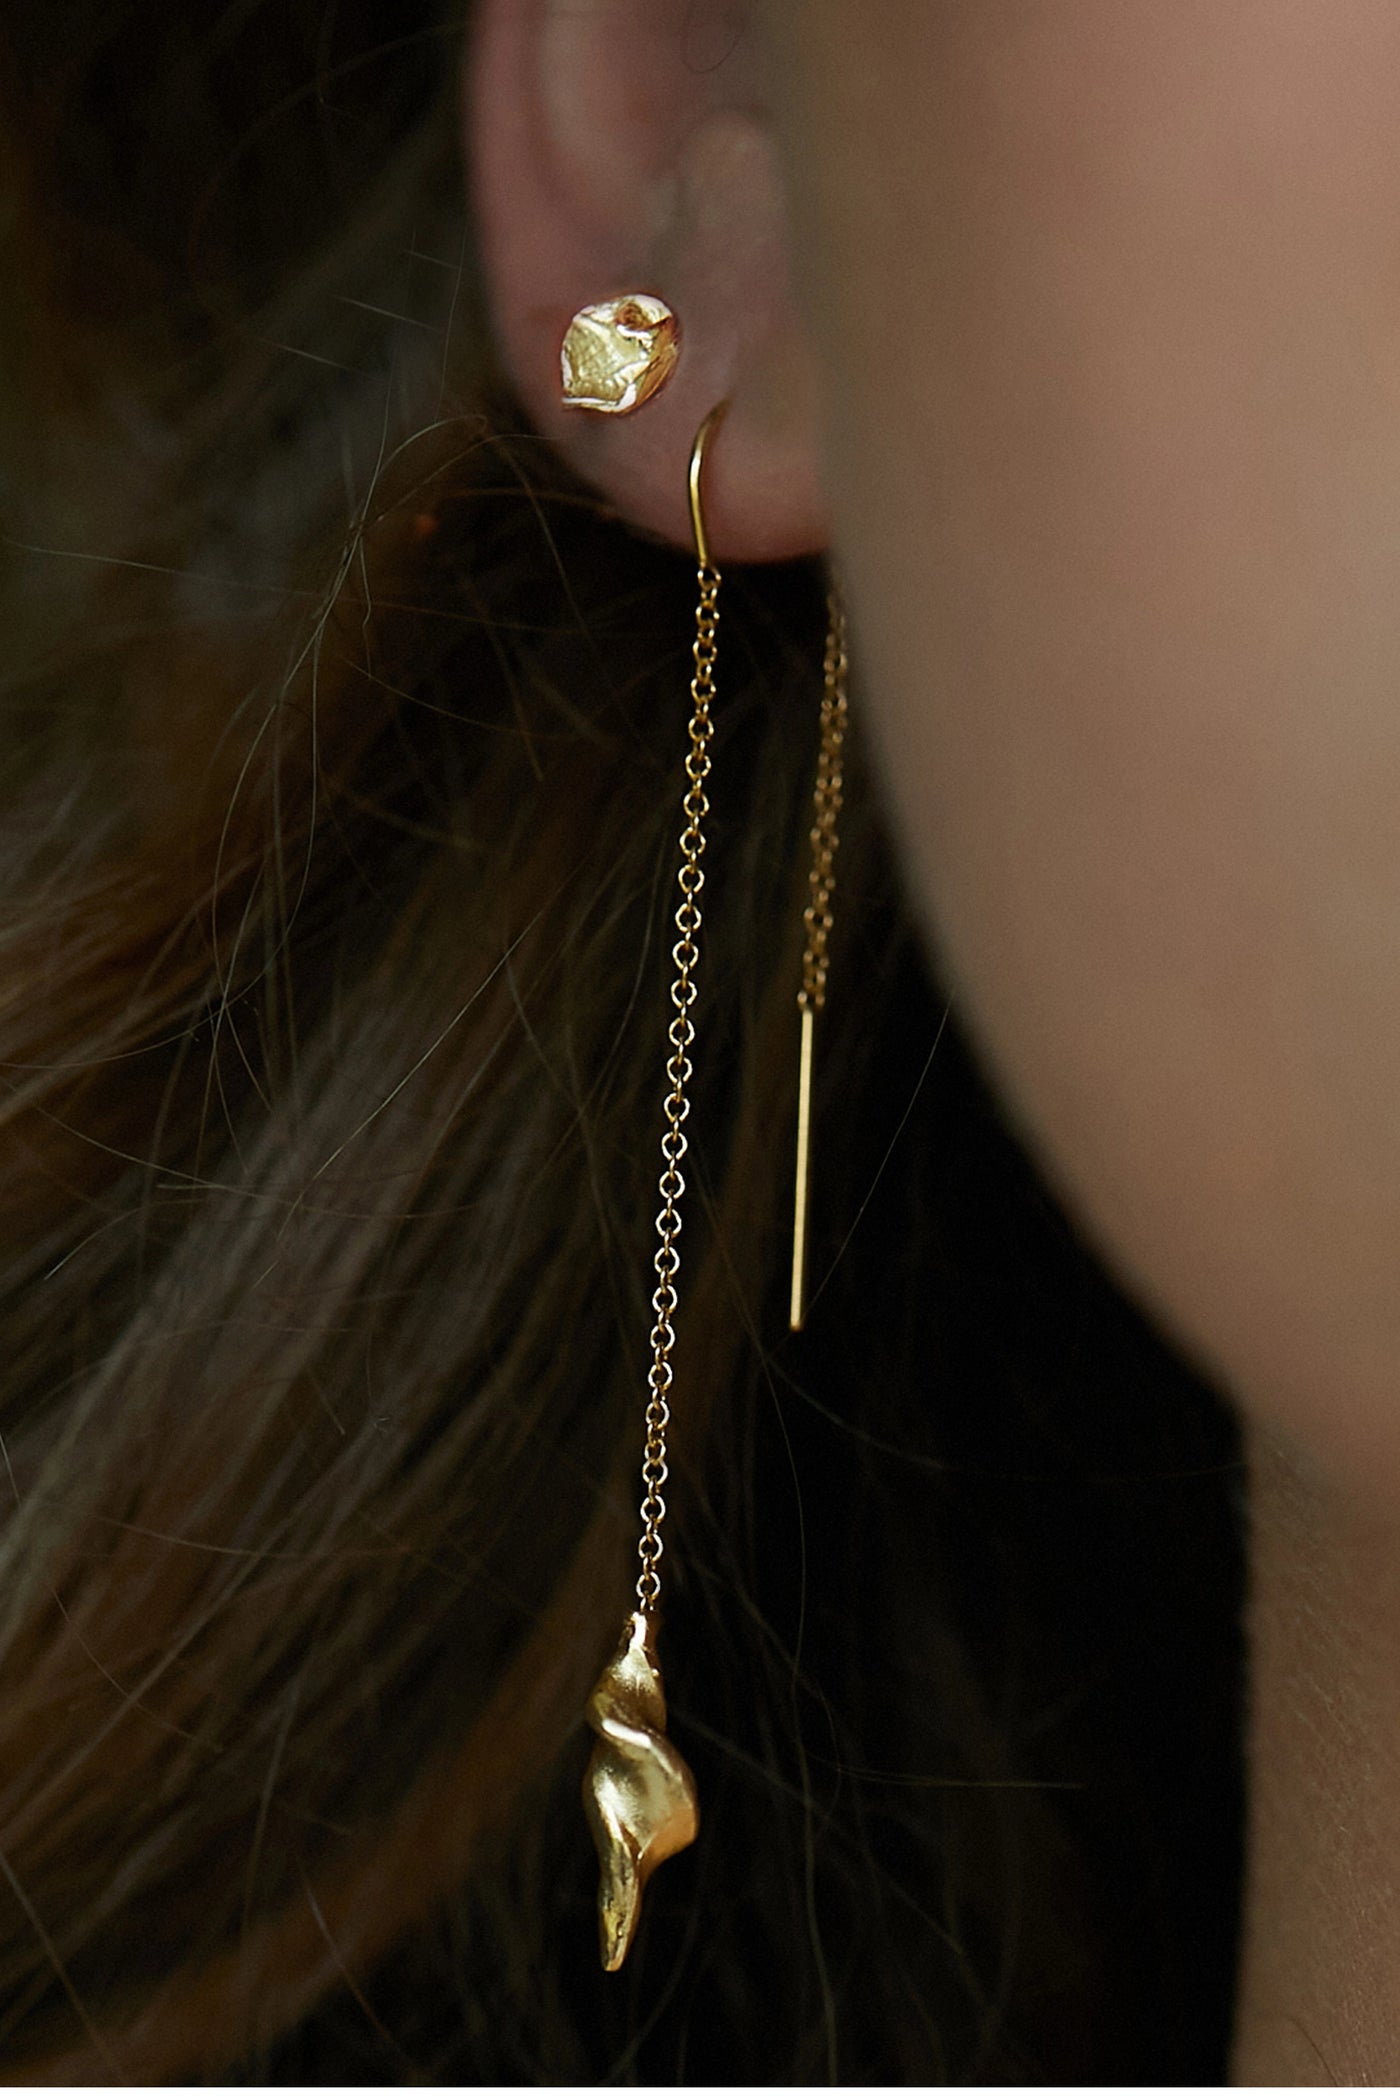 Flowstone shell earrings | עגיל צדף גלי תלוי מזהב